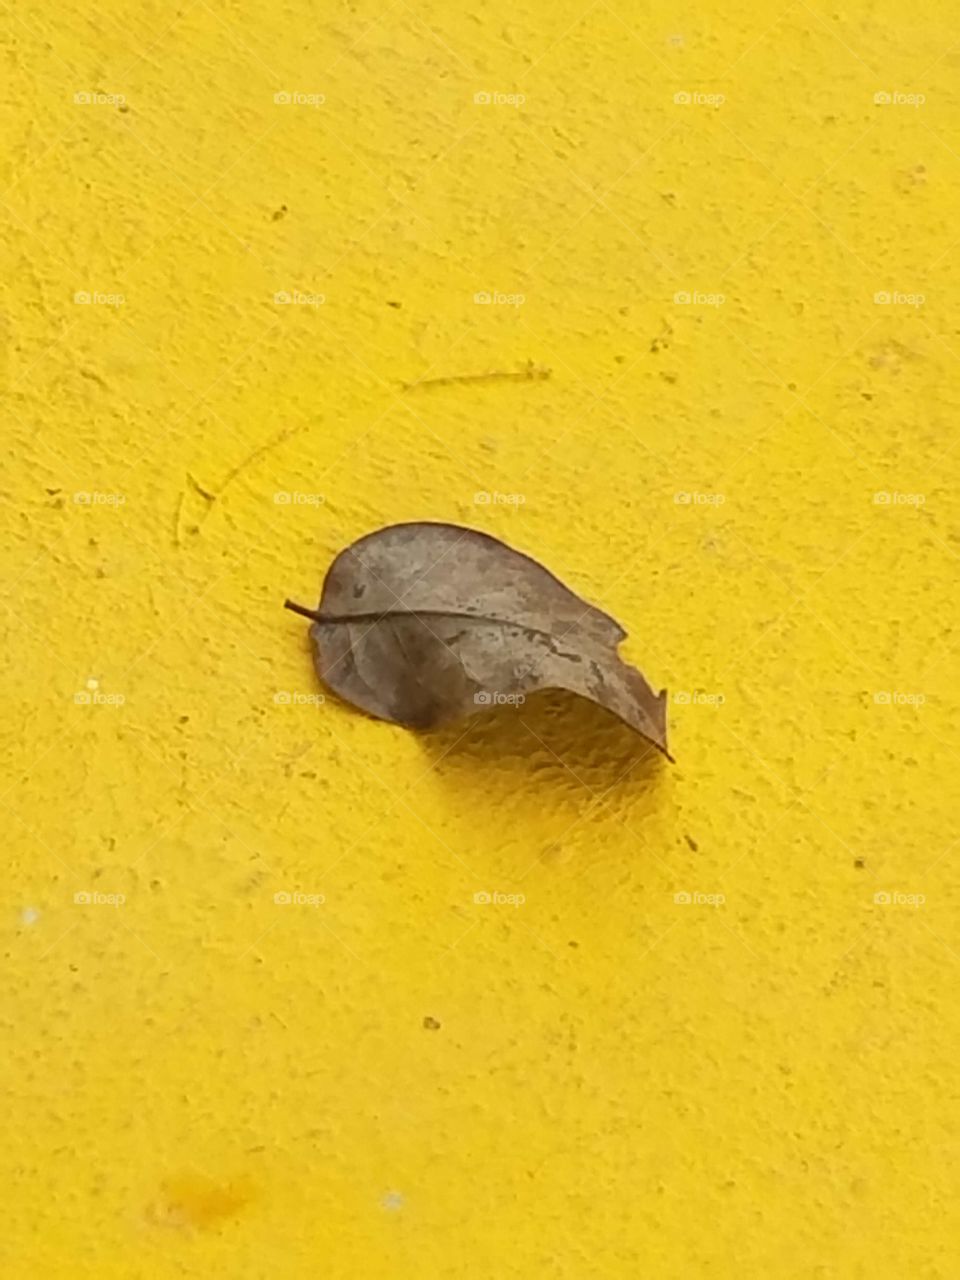 Dry Leaf on Yellow Pavement